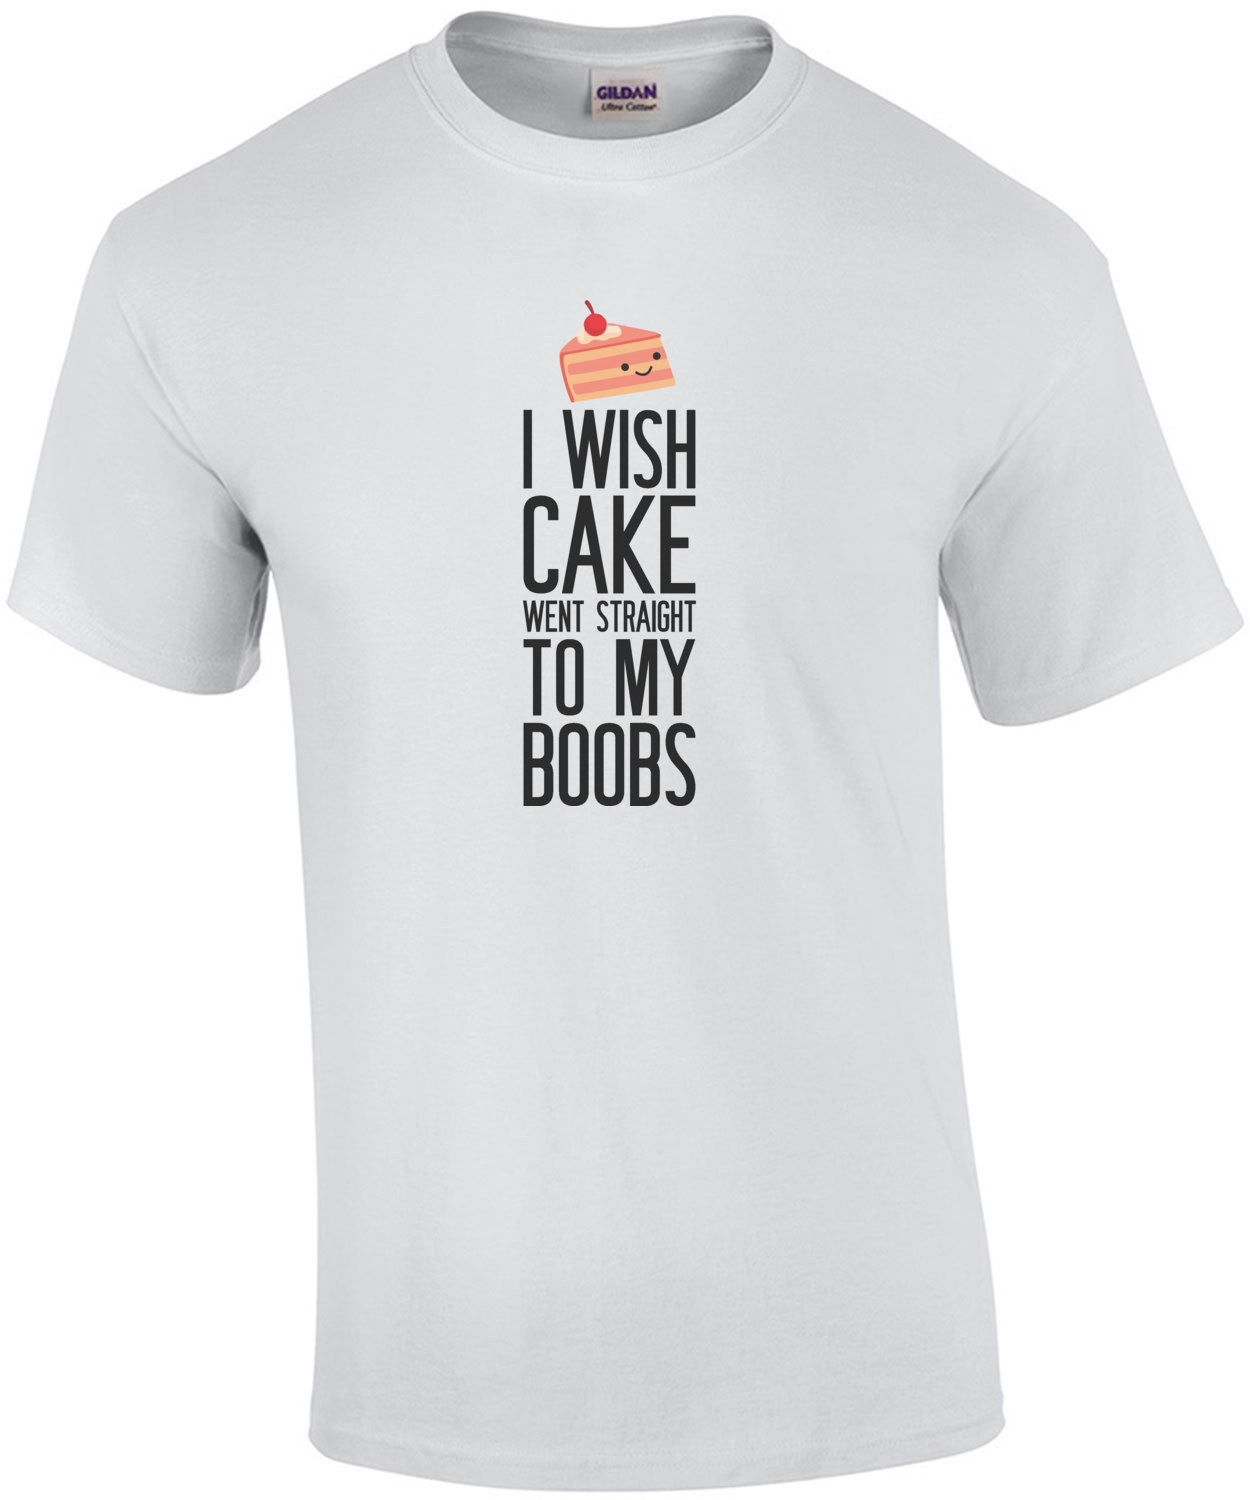 I wish cake went straight to my boobs - funny ladies t-shirt